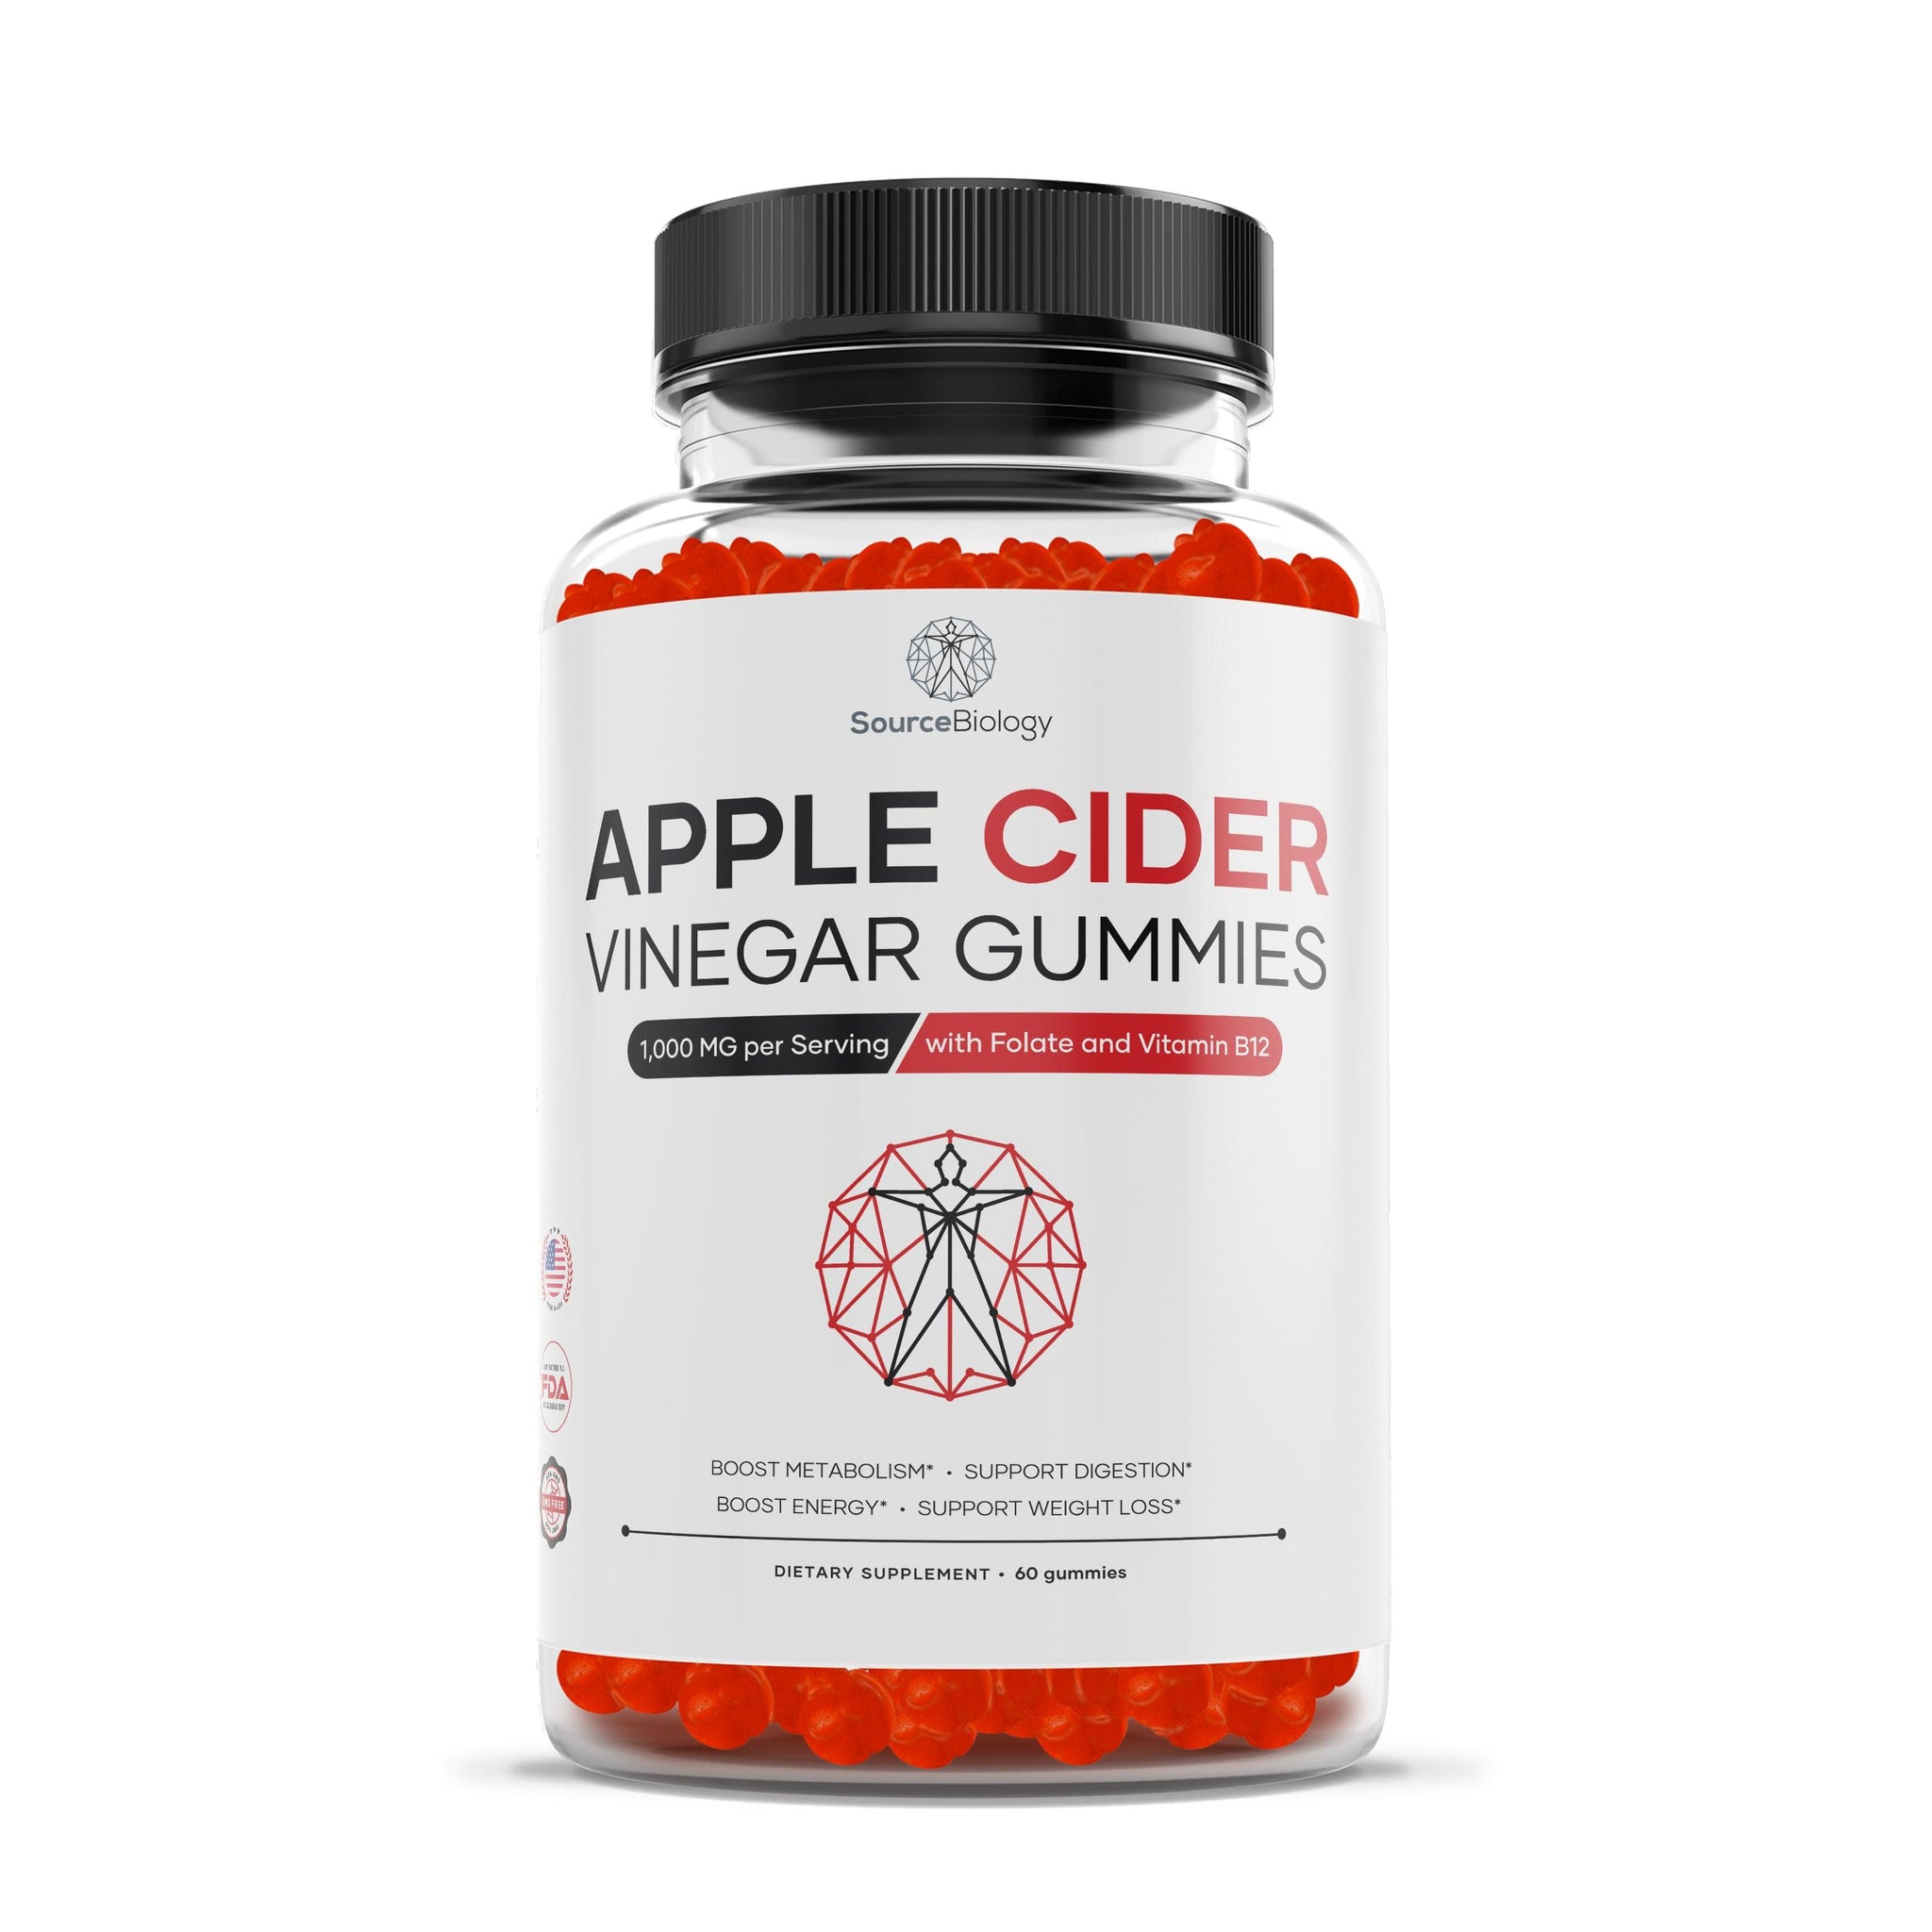 Apple Cider Vinegar Gummies 1000 MG with Folate and Vitamin B12